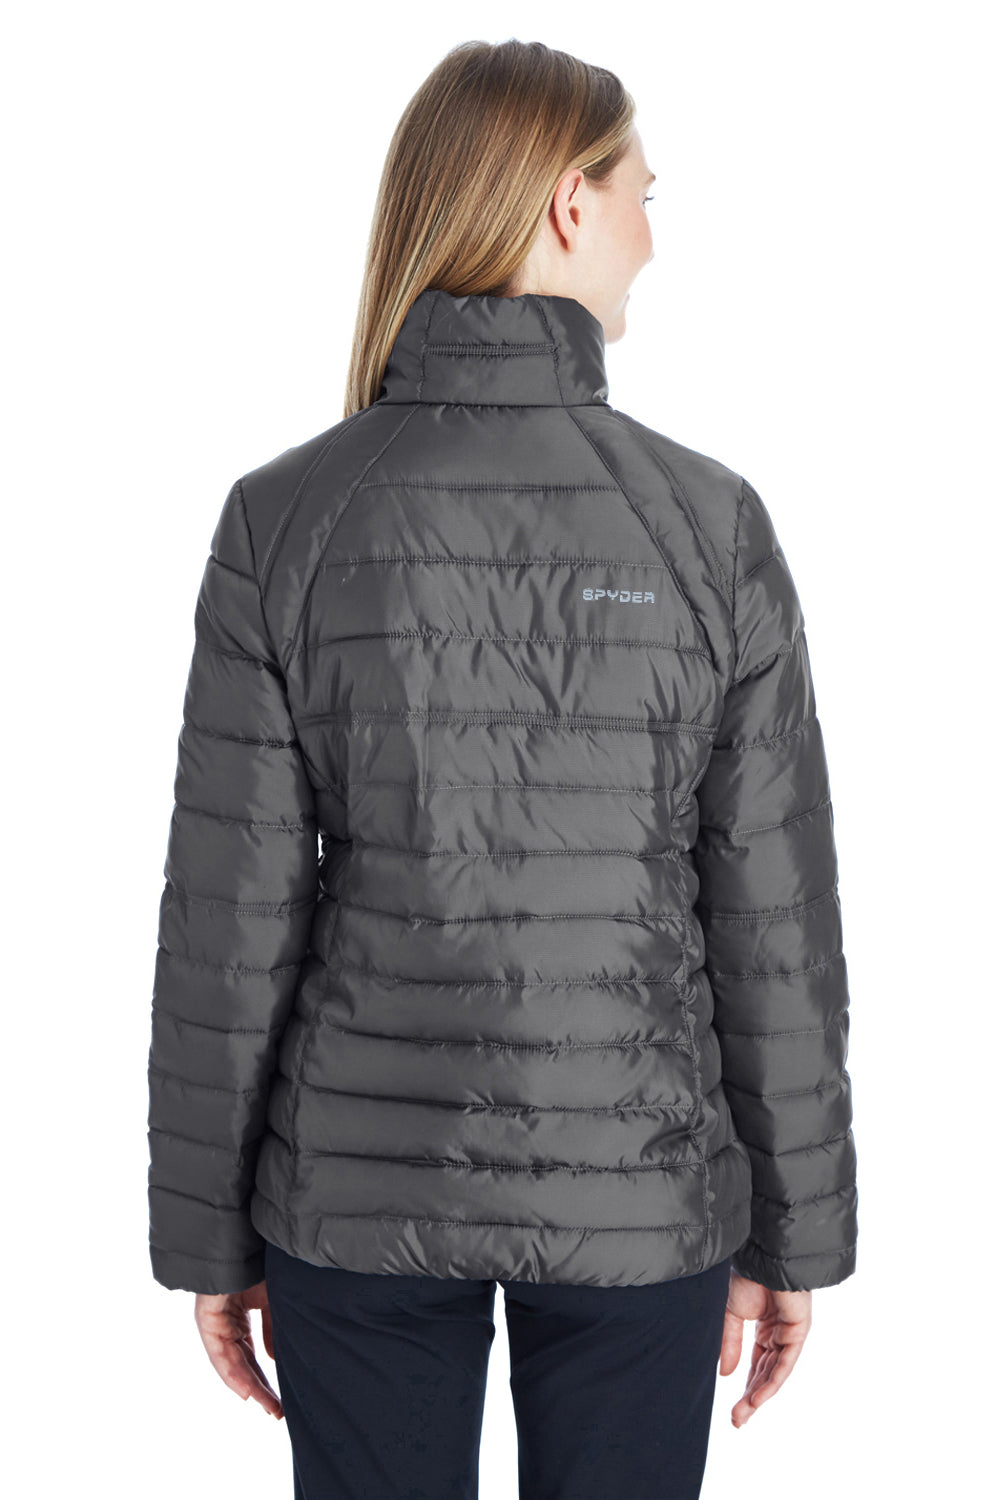 Spyder 187336 Womens Supreme Puffer Full Zip Jacket Polar Grey Back